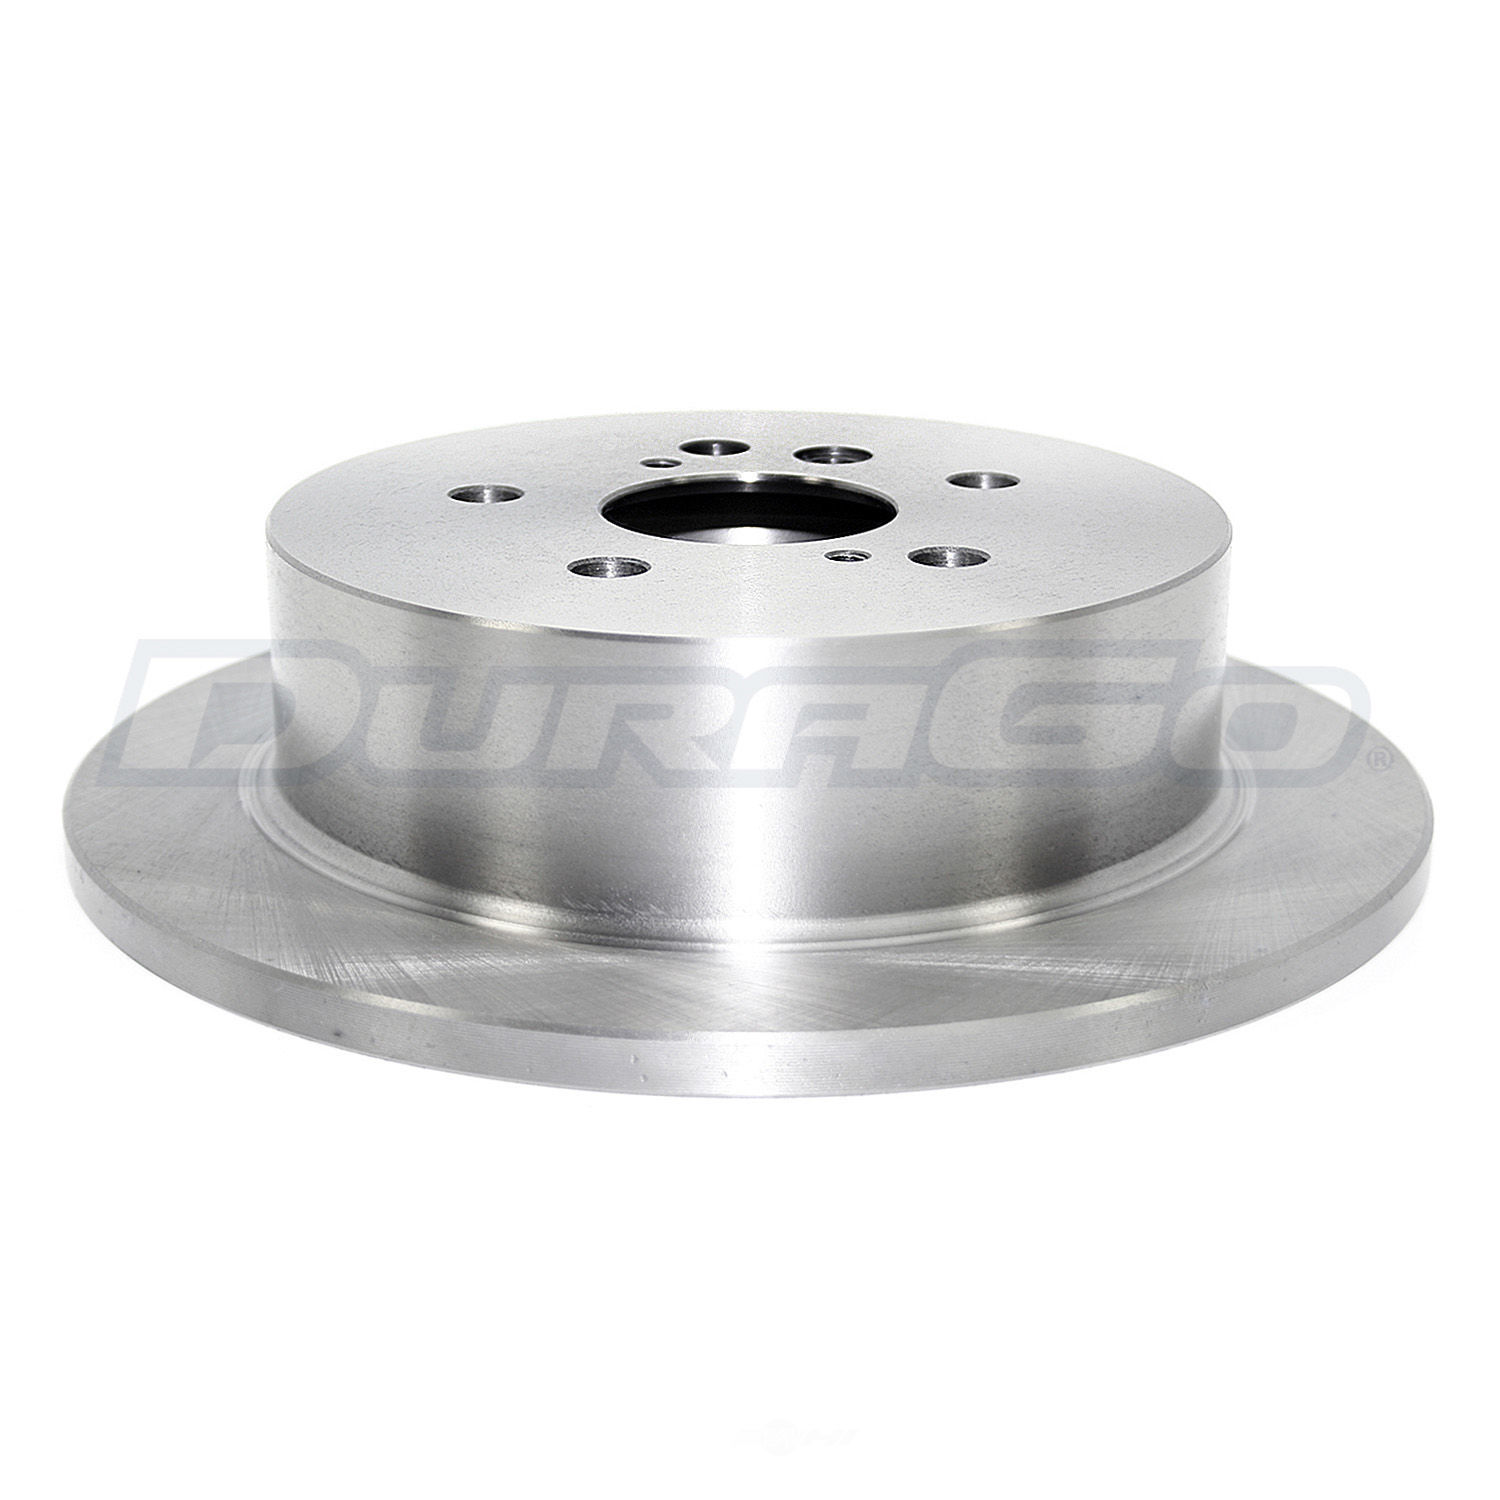 DURAGO - Disc Brake Rotor (Rear) - D48 BR31357